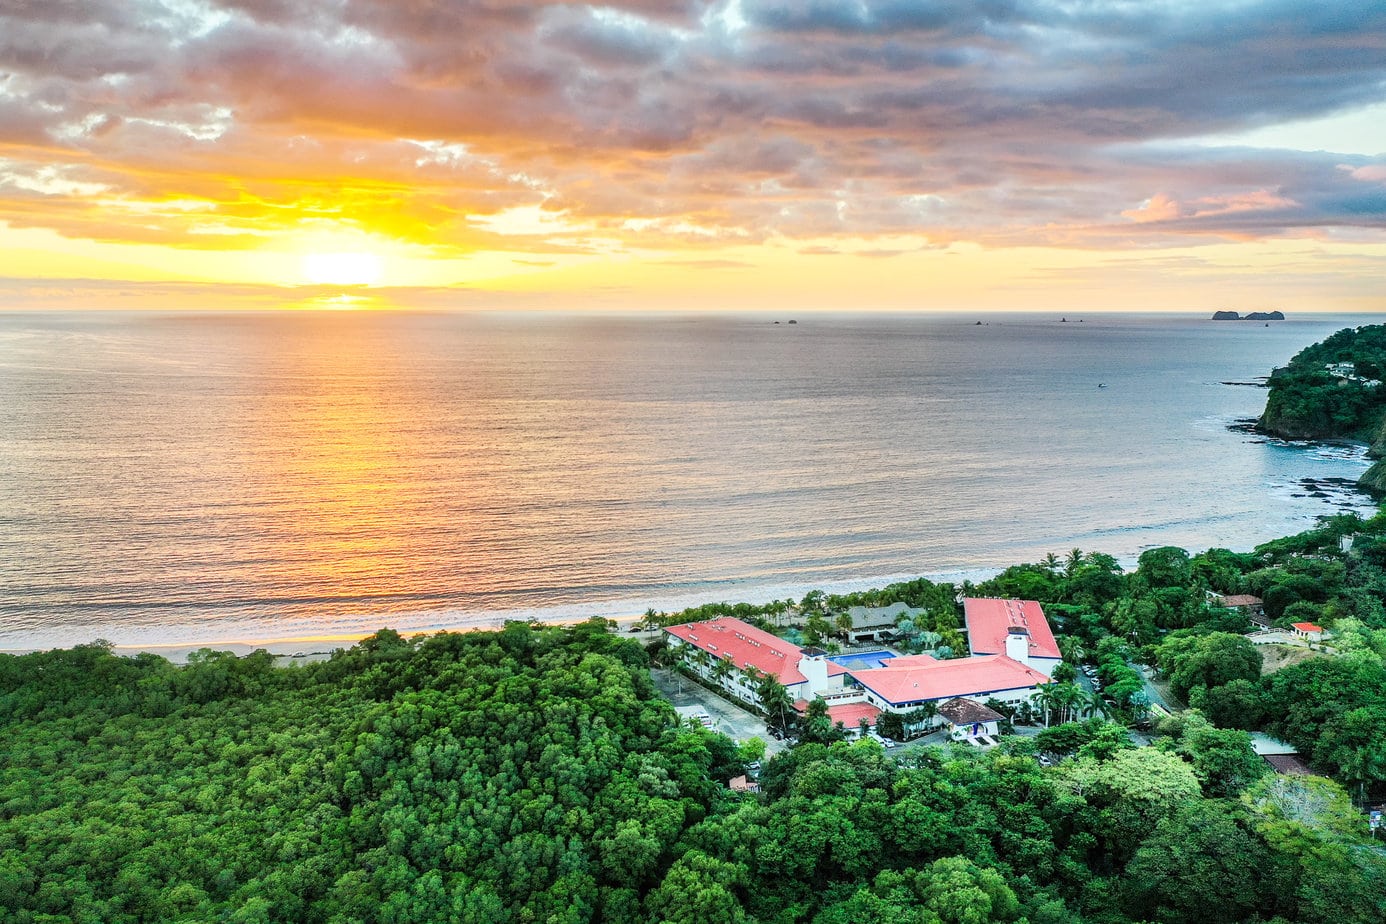 Margaritaville Beach Resort Costa Rica (For Families!)